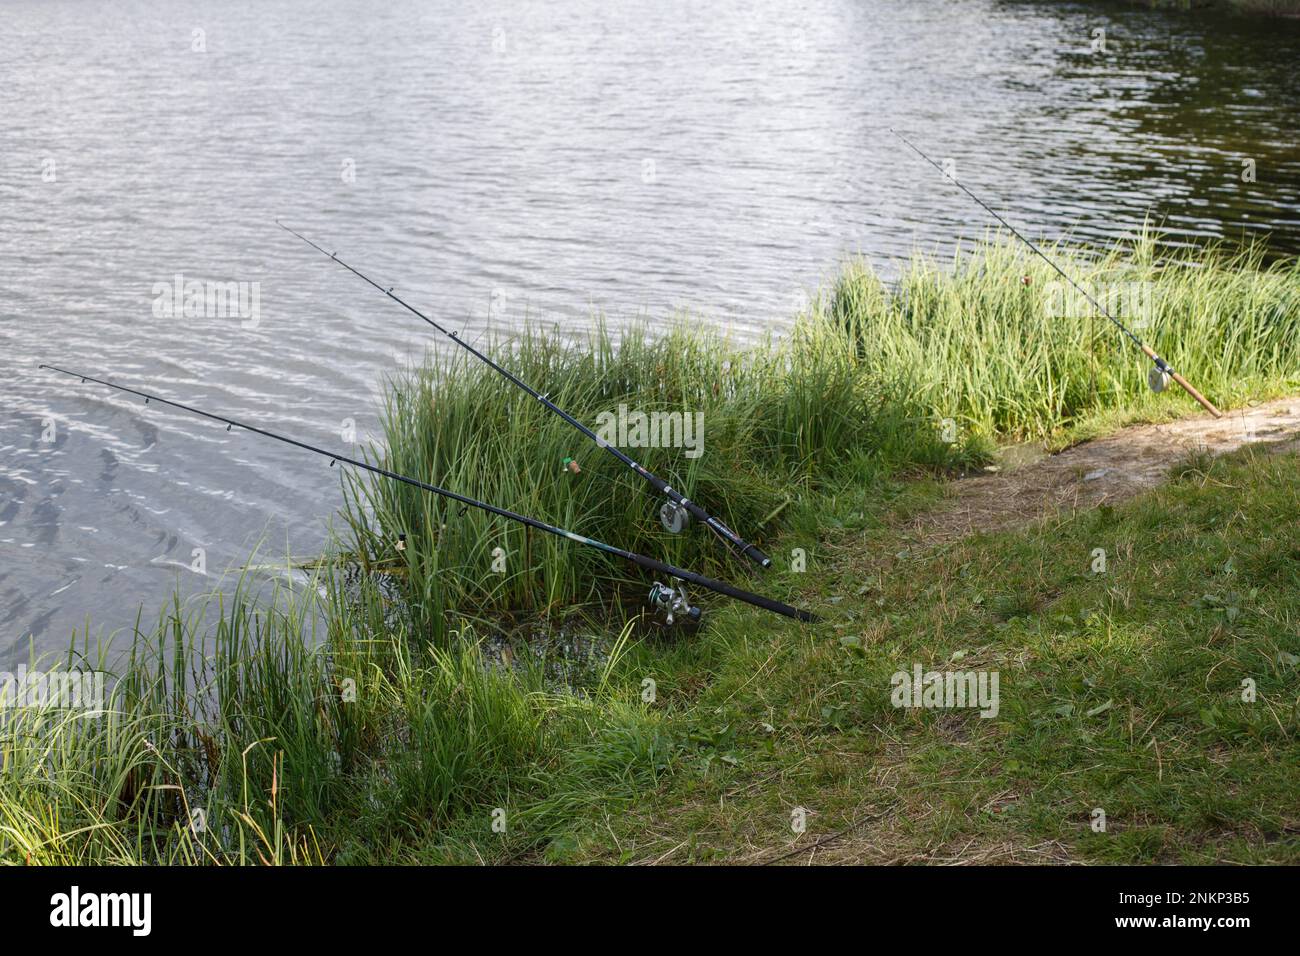 https://c8.alamy.com/comp/2NKP3B5/a-fishing-rods-on-the-lake-shore-2NKP3B5.jpg